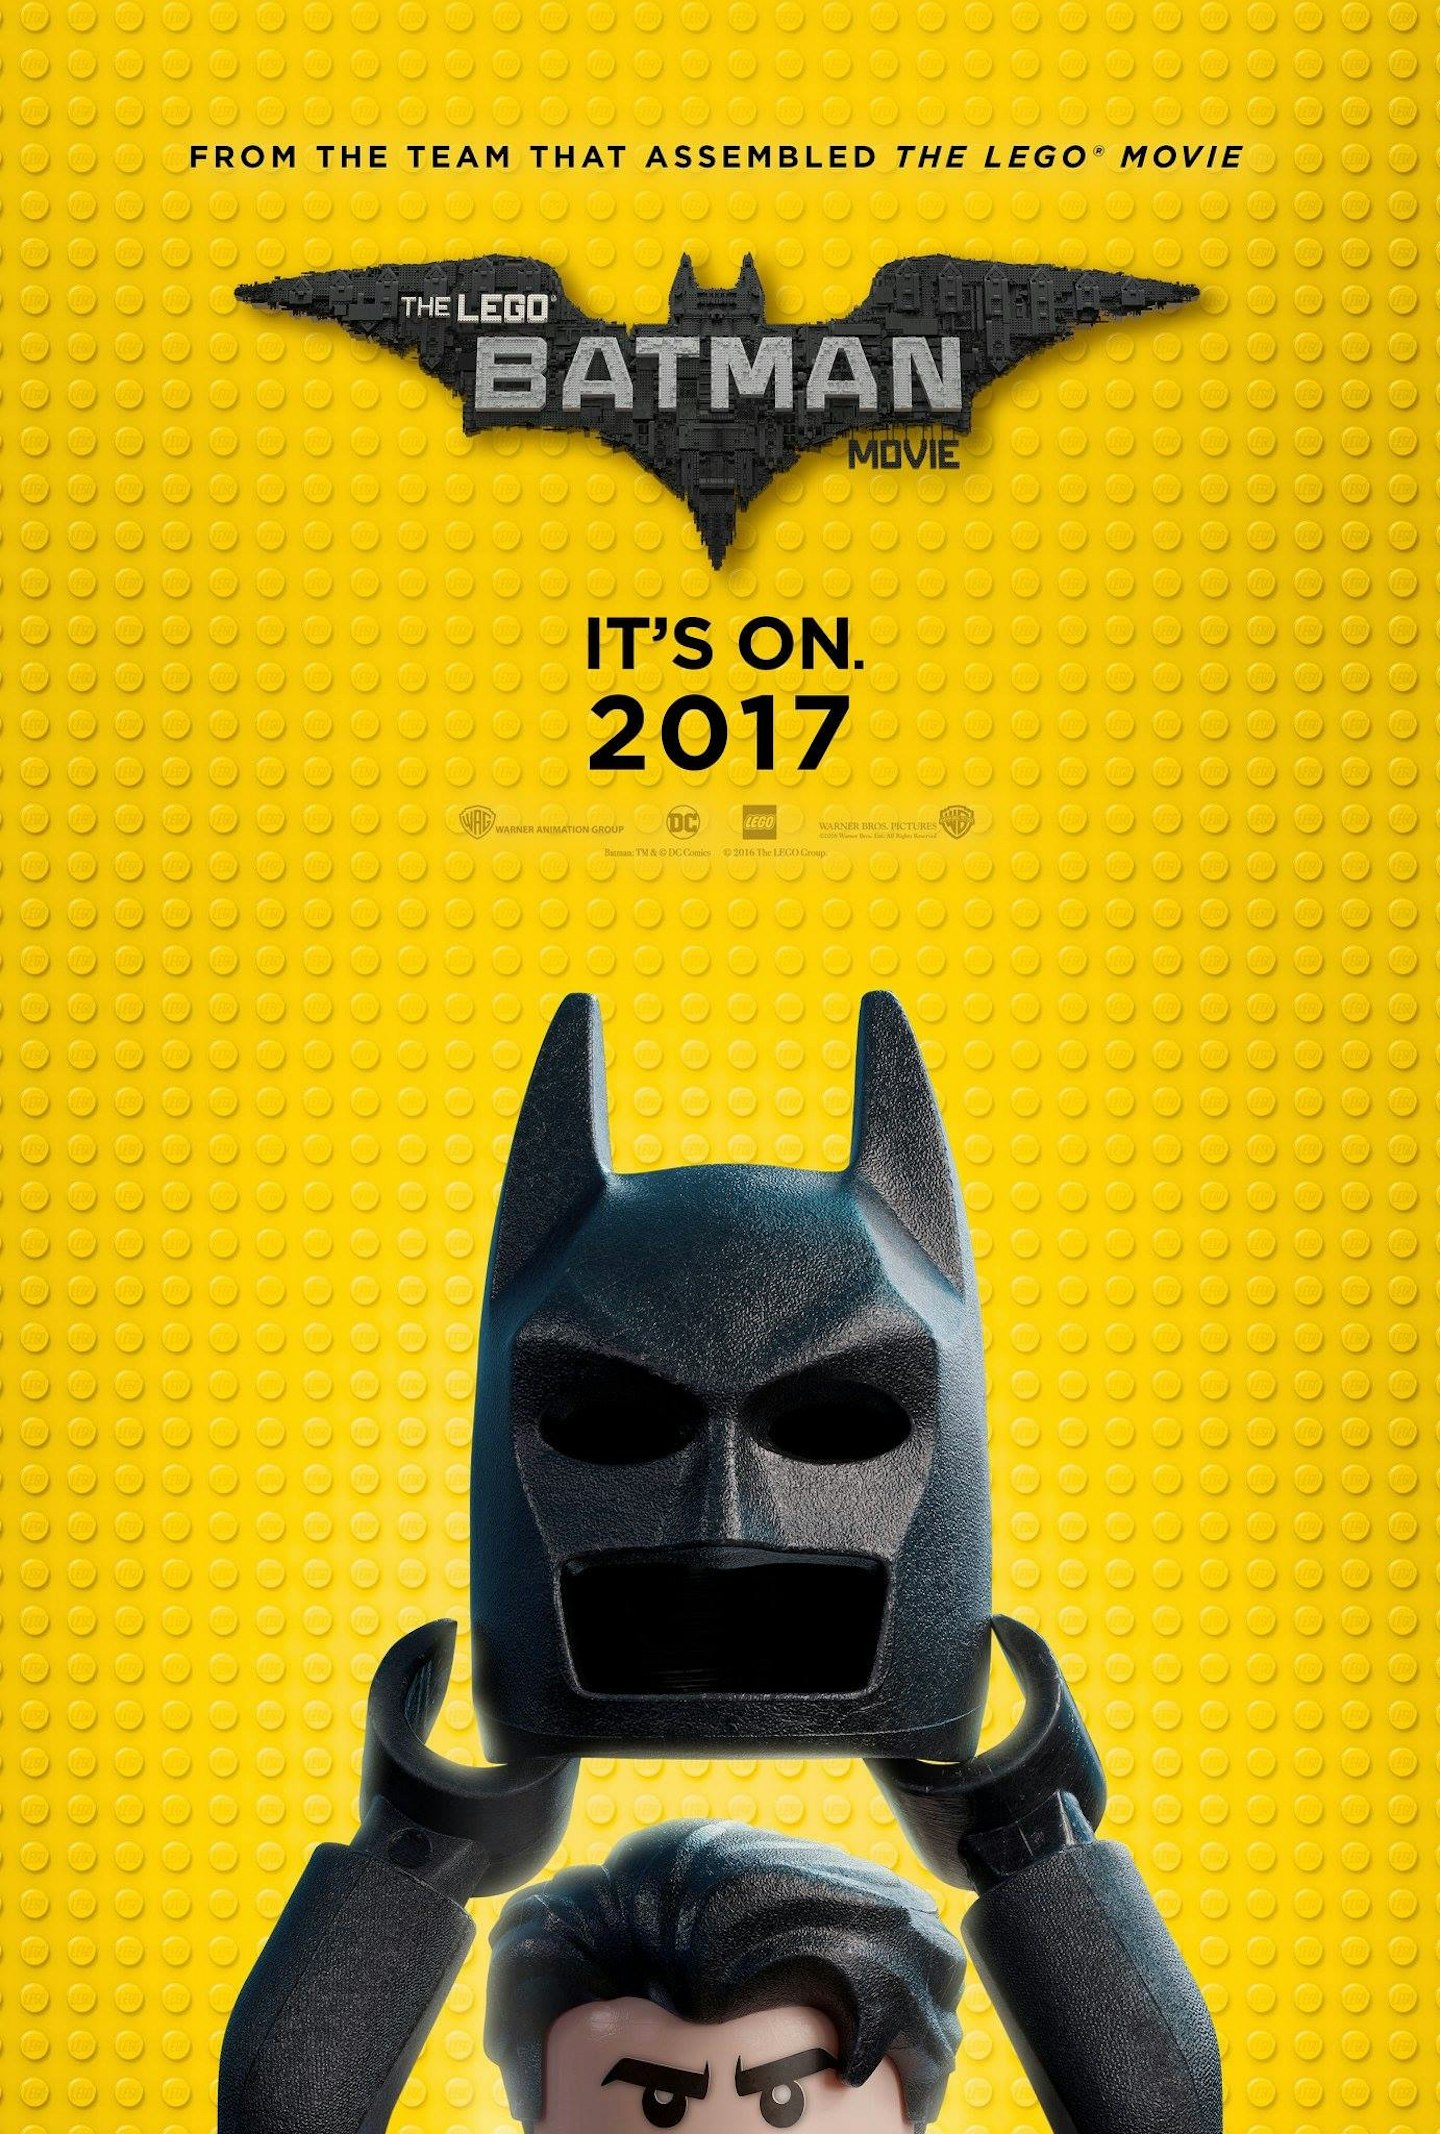 The Lego Batman Comic-Con poster